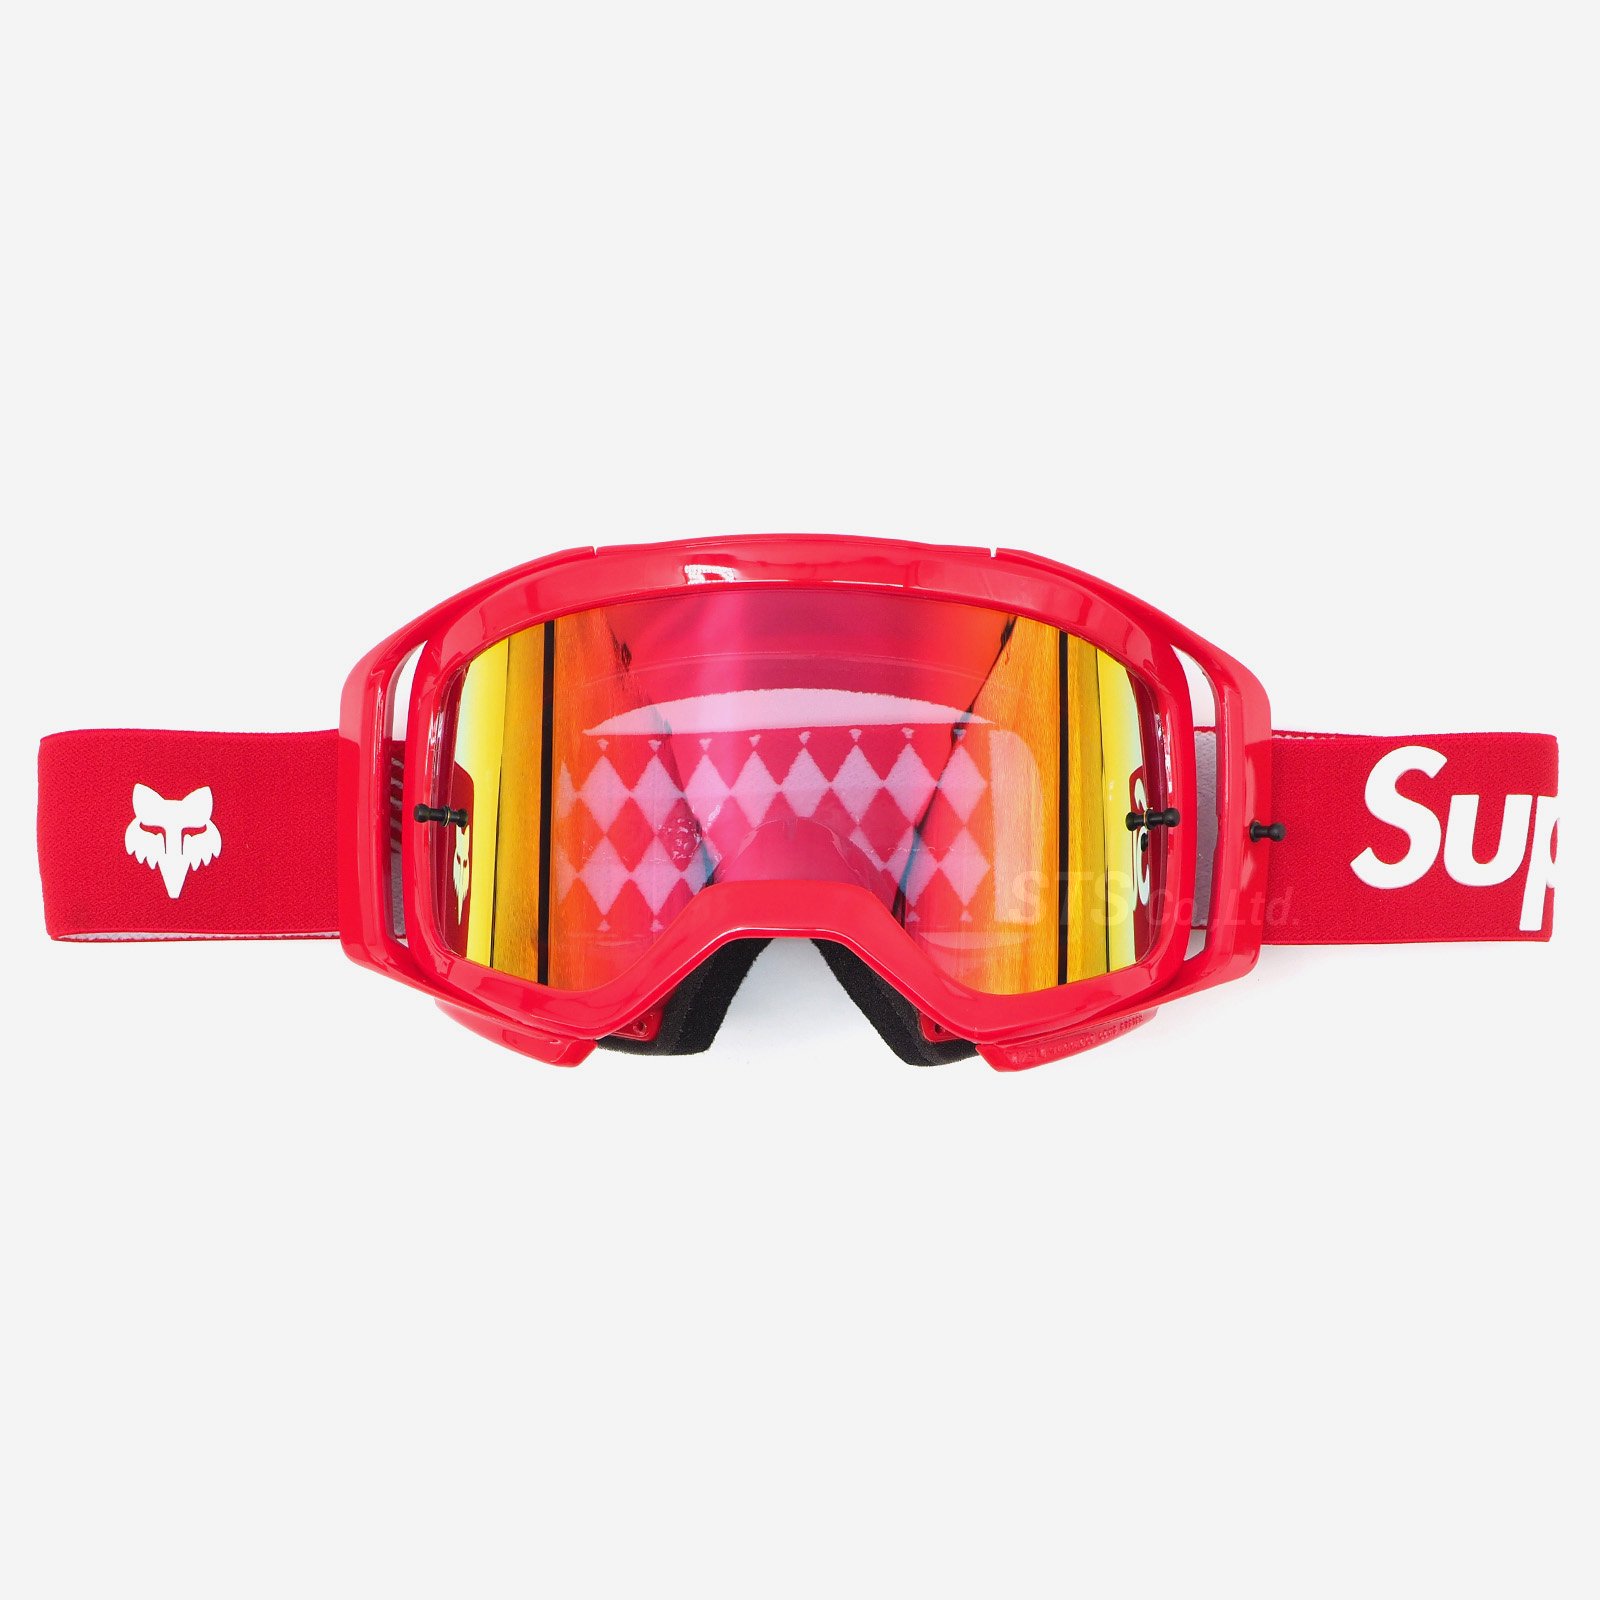 Supreme/Fox Racing Goggles | ストリート系バイクゴーグル - UG.SHAFT